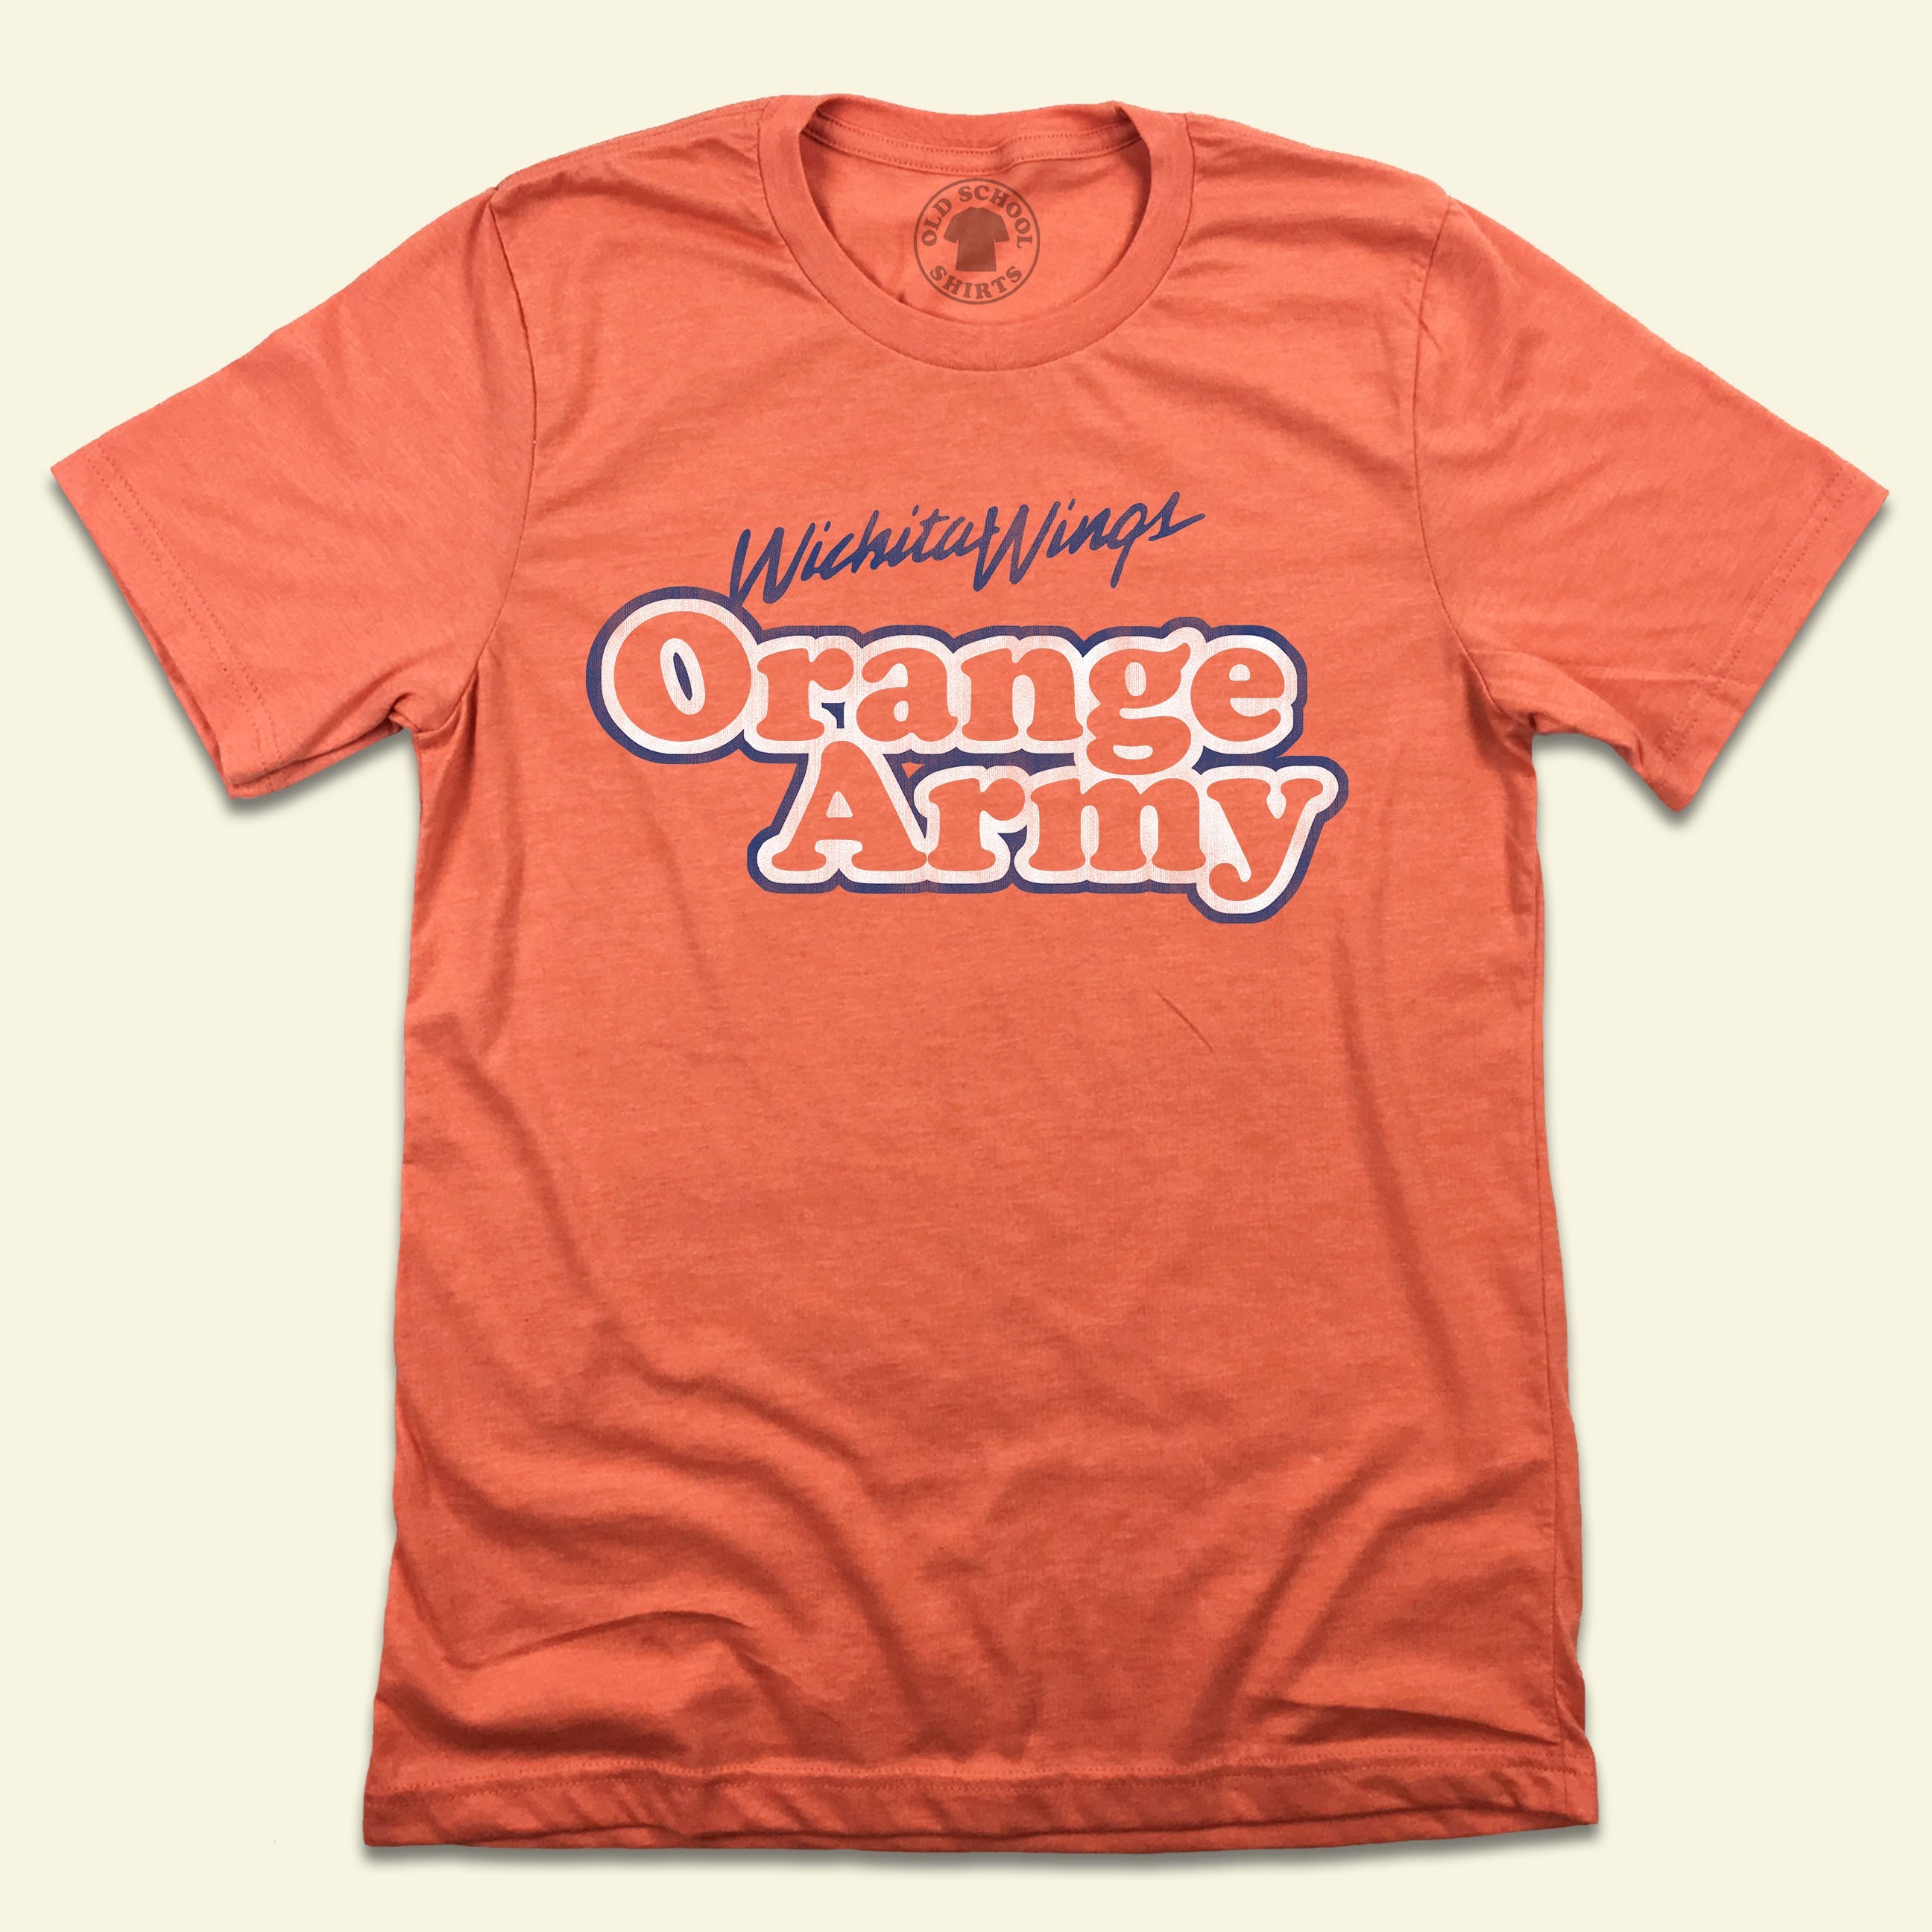 Orange Army